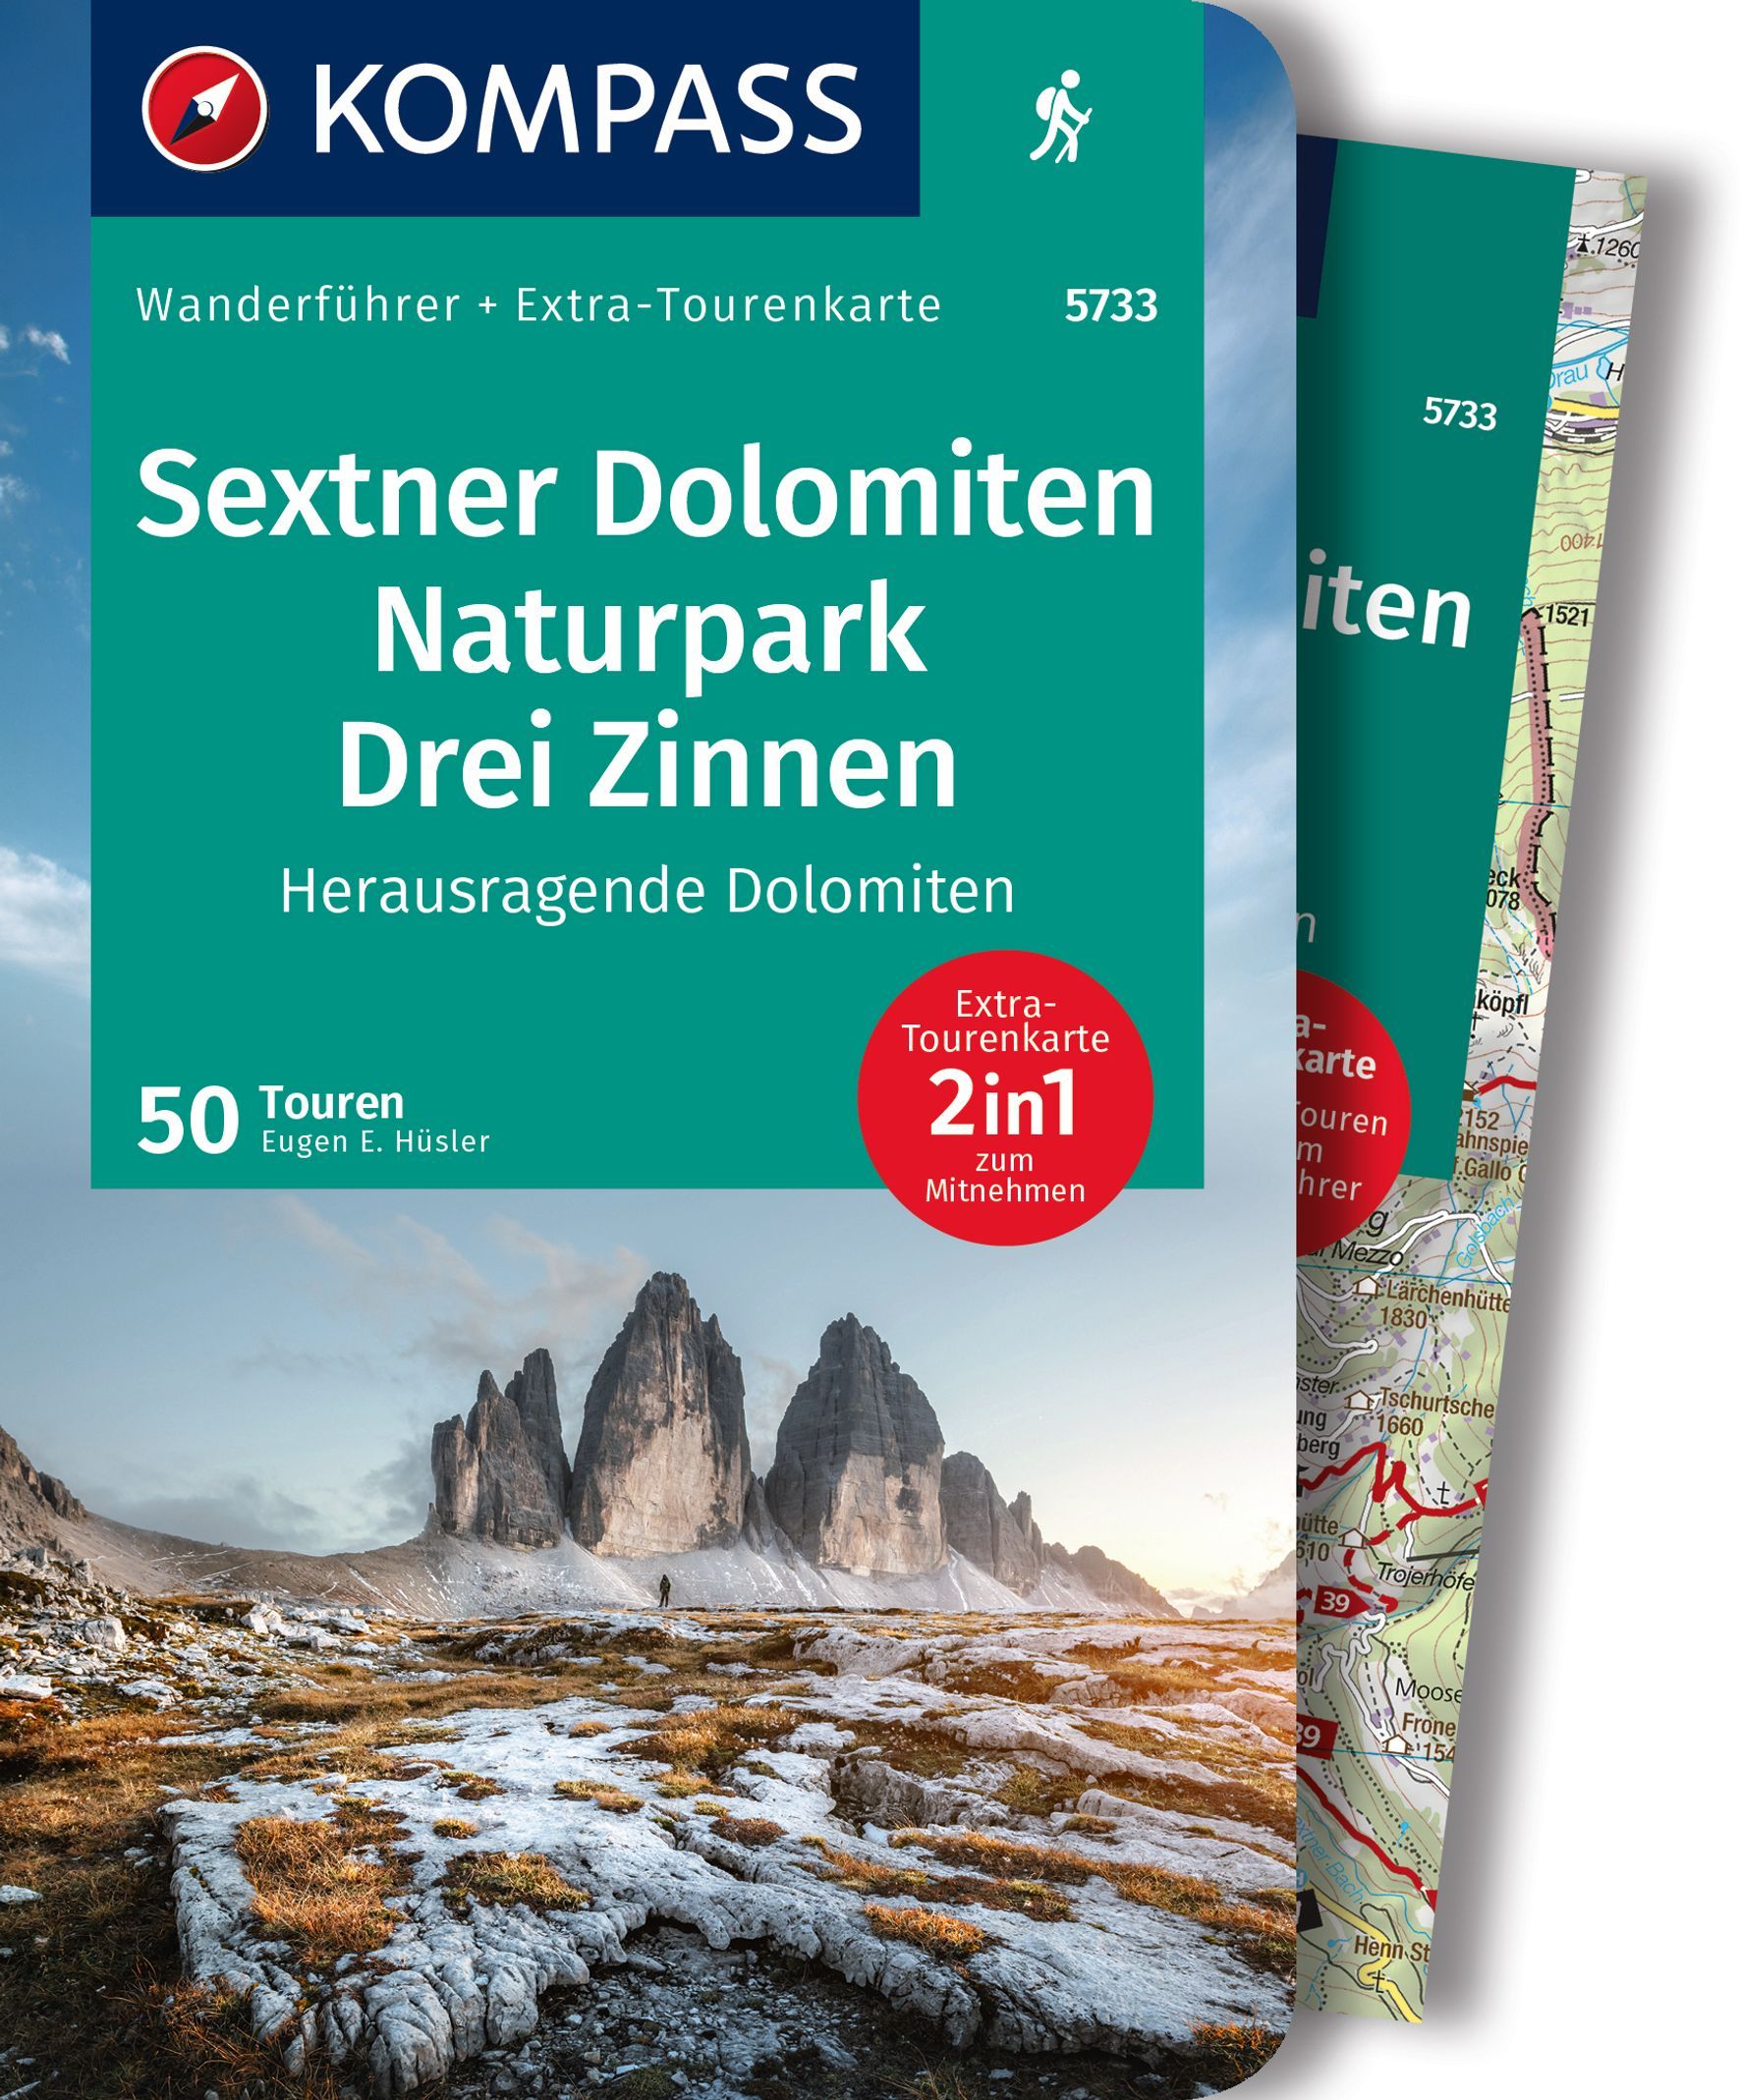 Online bestellen: Wandelgids 5733 Wanderführer Sextner Dolomiten Naturpark Drei Zinnen | Kompass